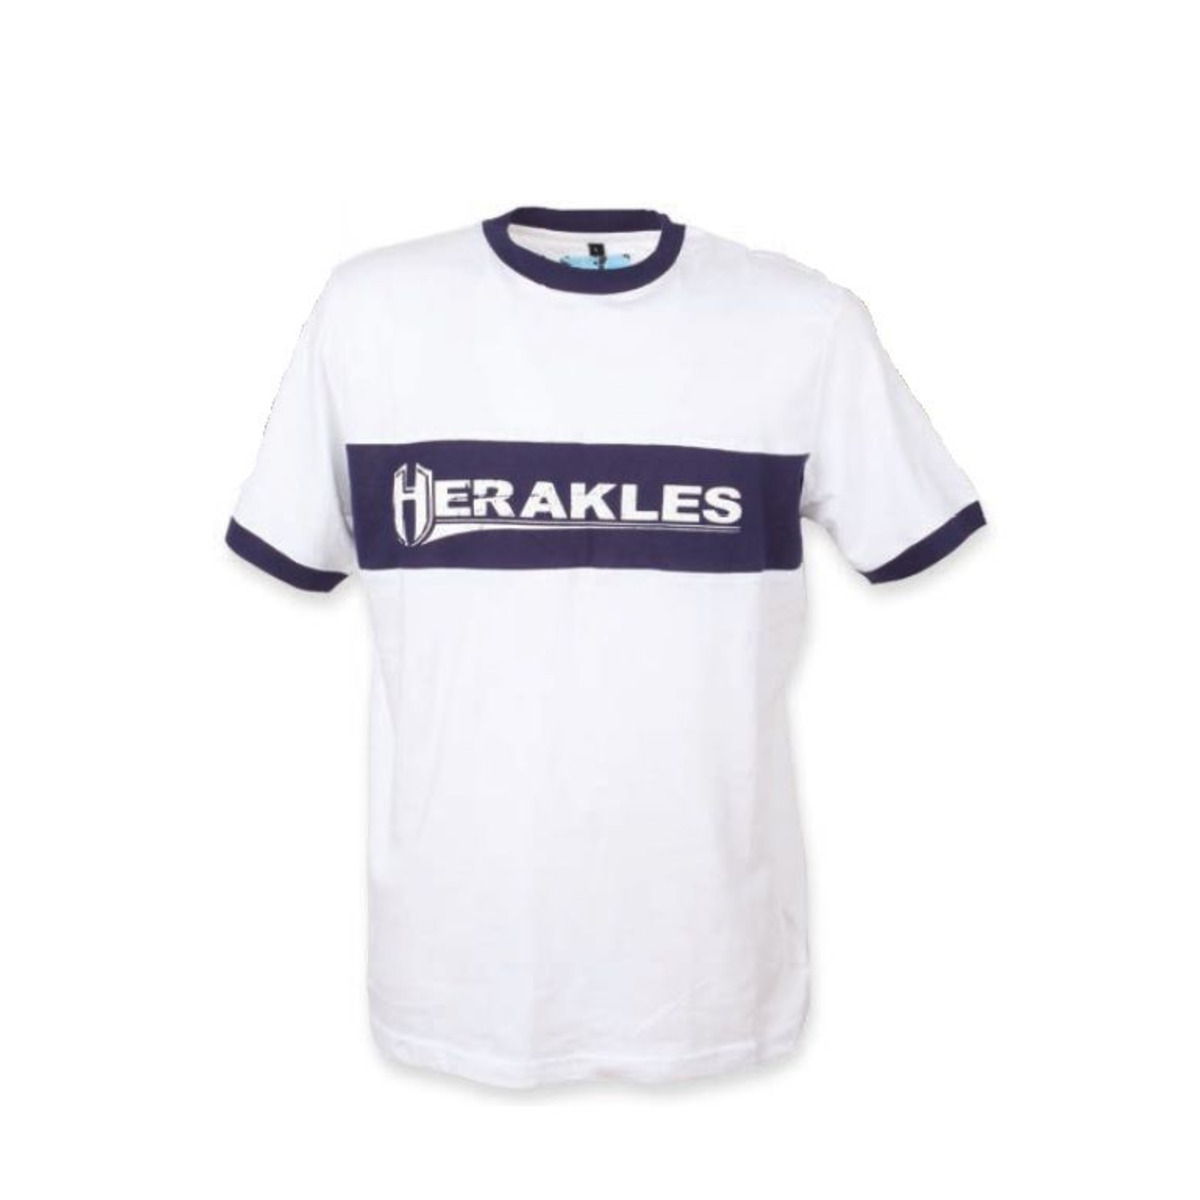 Herakles T-Shirt Weiß-Blau - 2XL